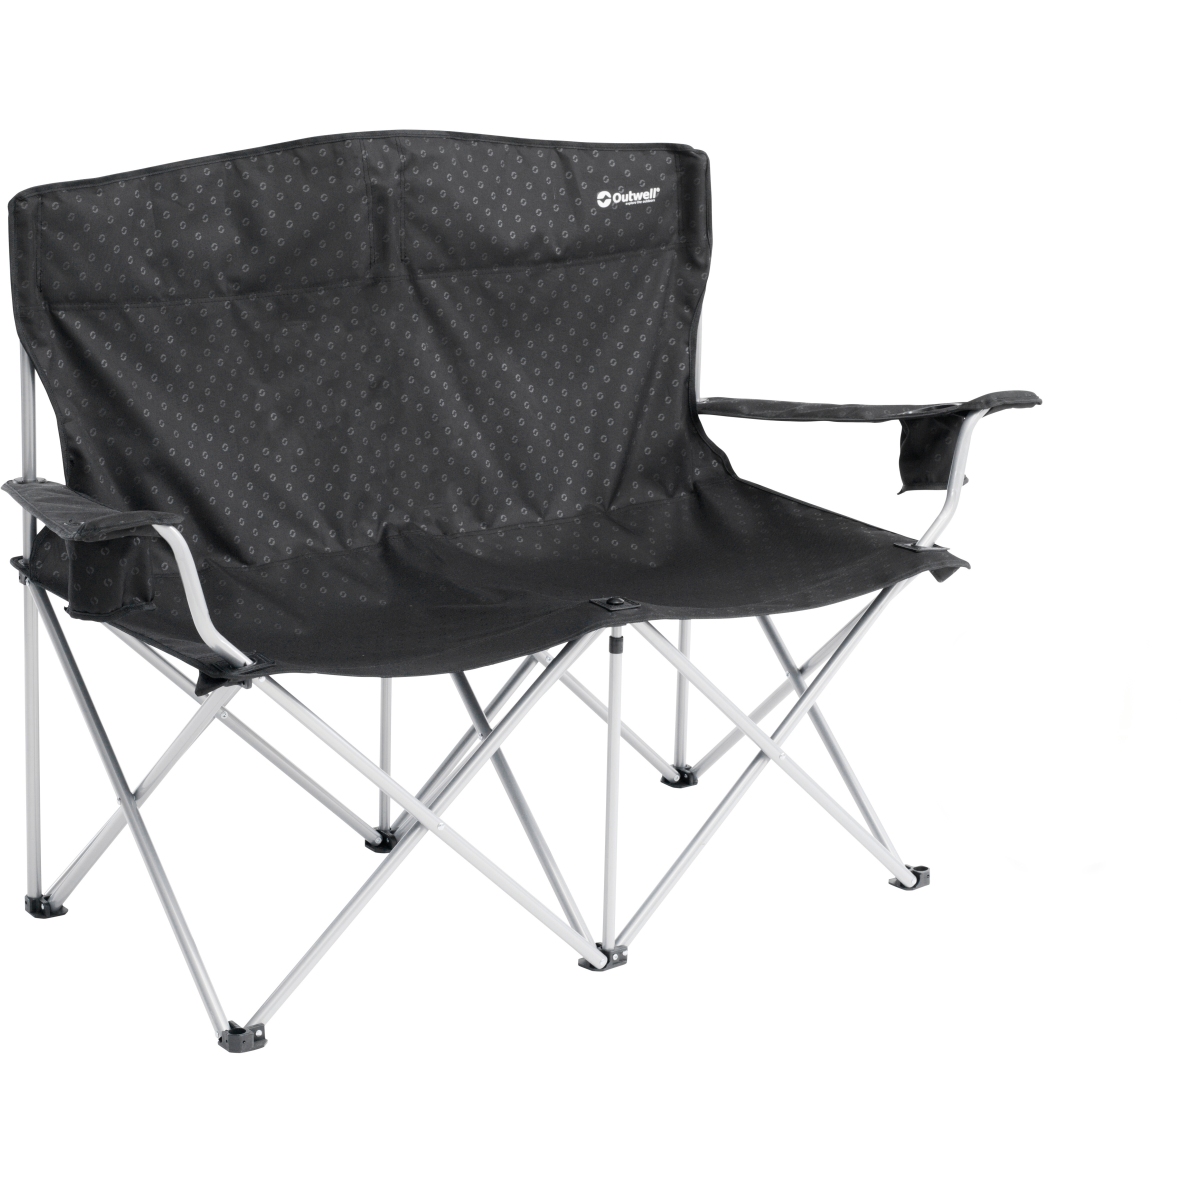 Image de Outwell Catamarca Sofa Double Camping Chair - Noir